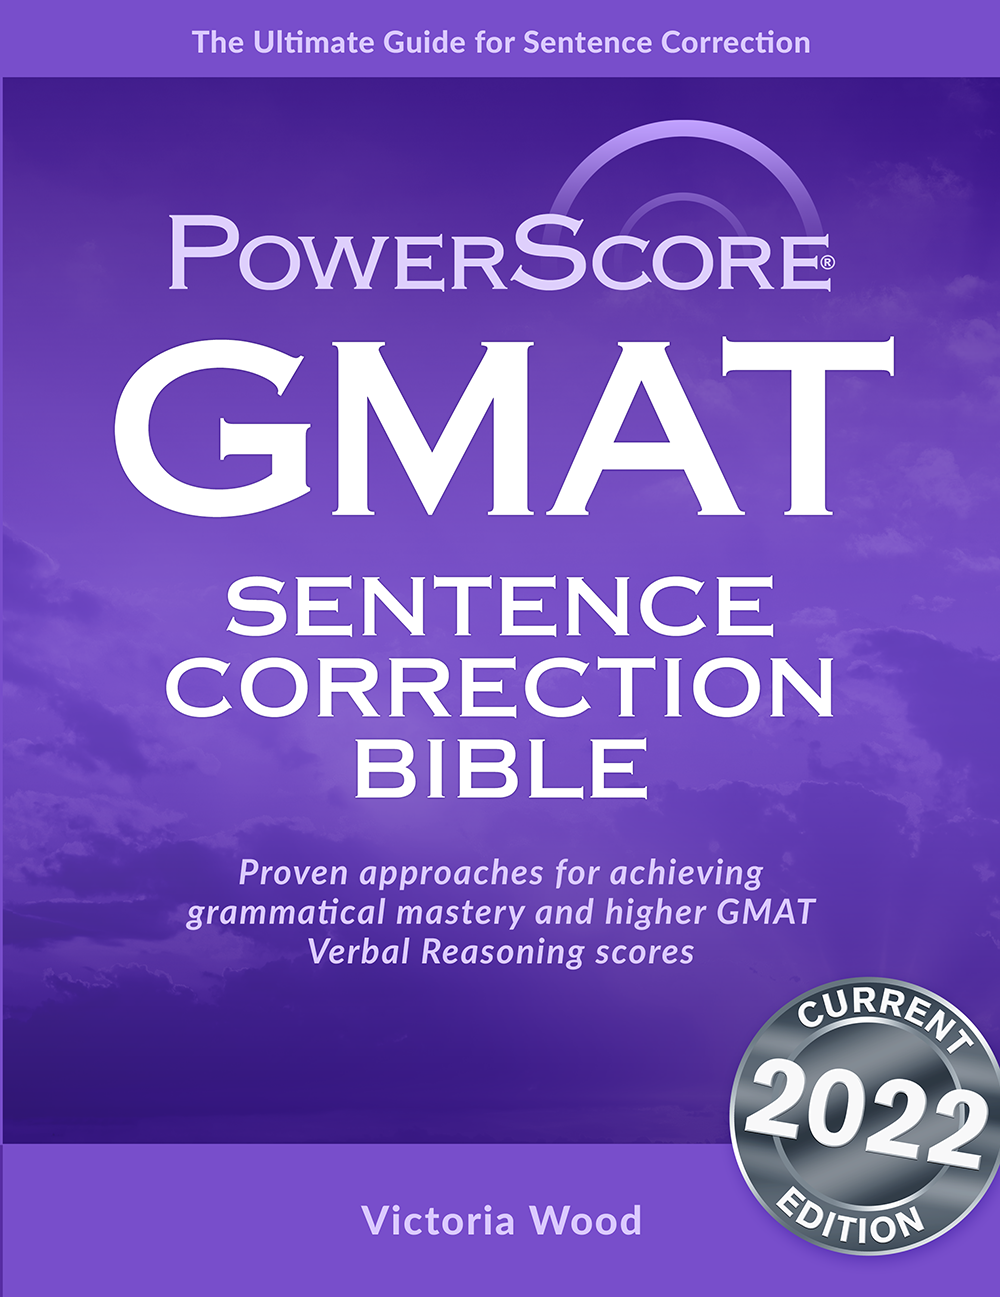 The PowerScore GMAT Sentence Correction Bible